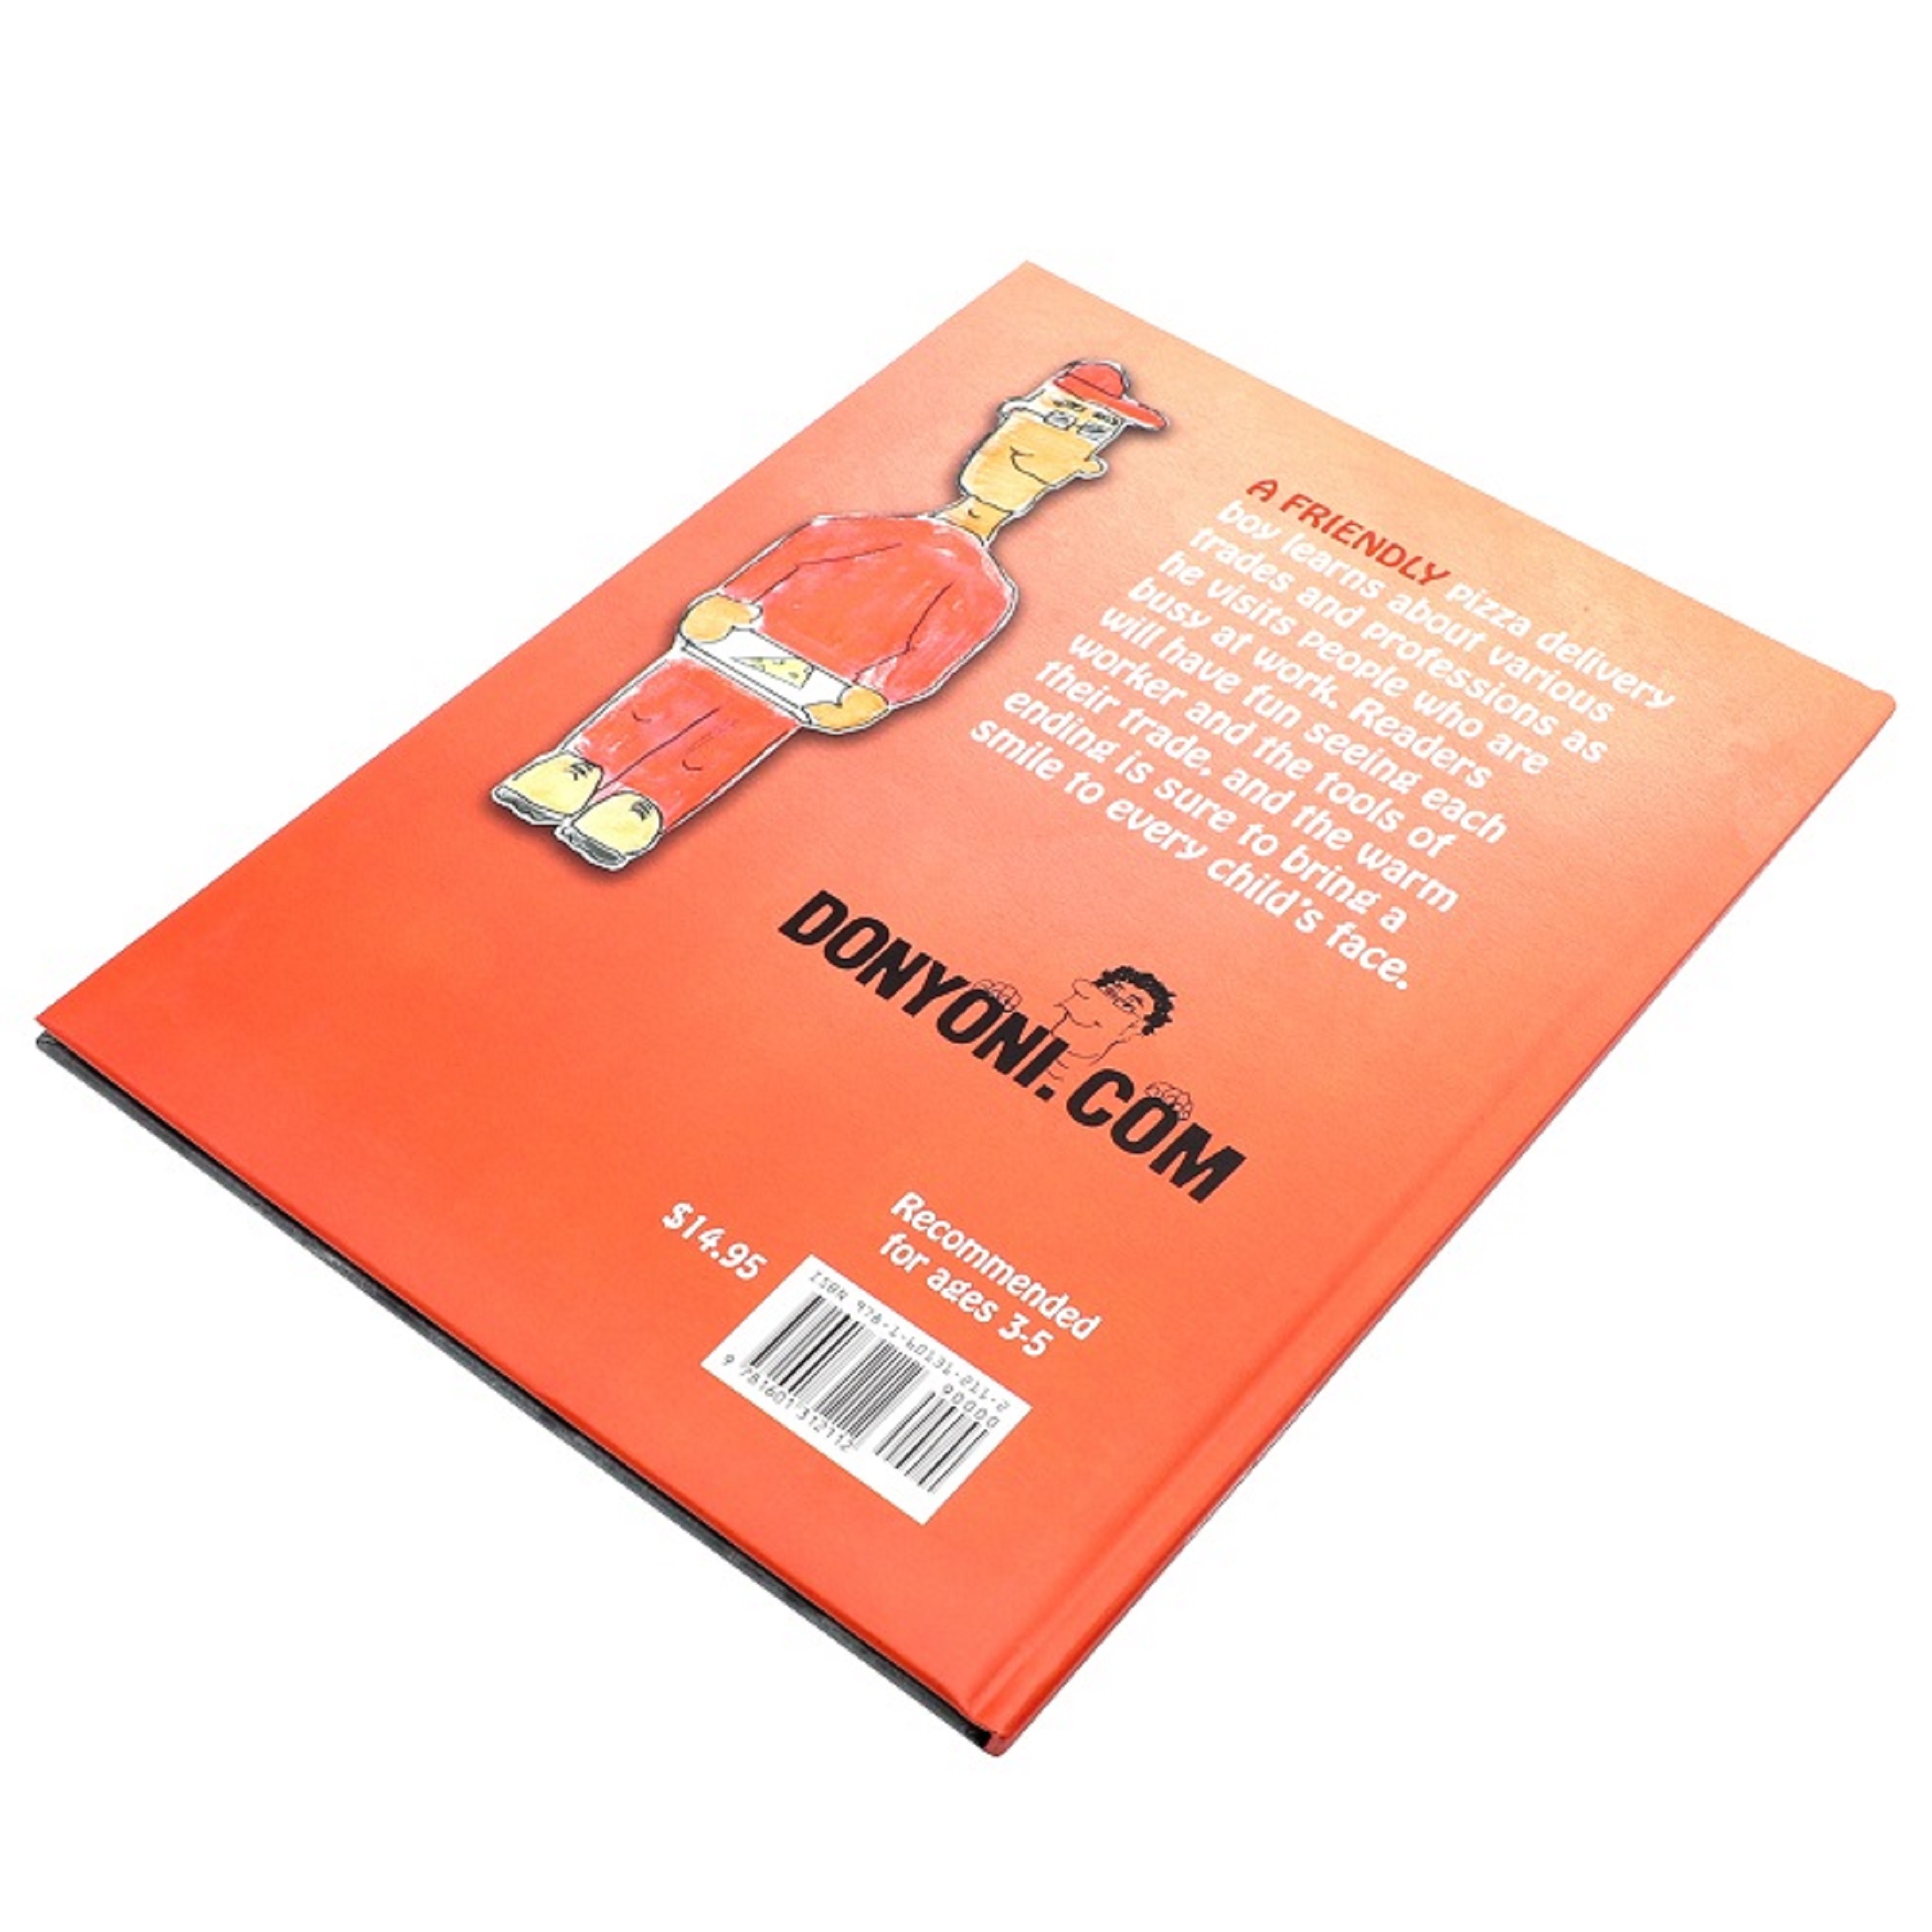 Custom softcover book